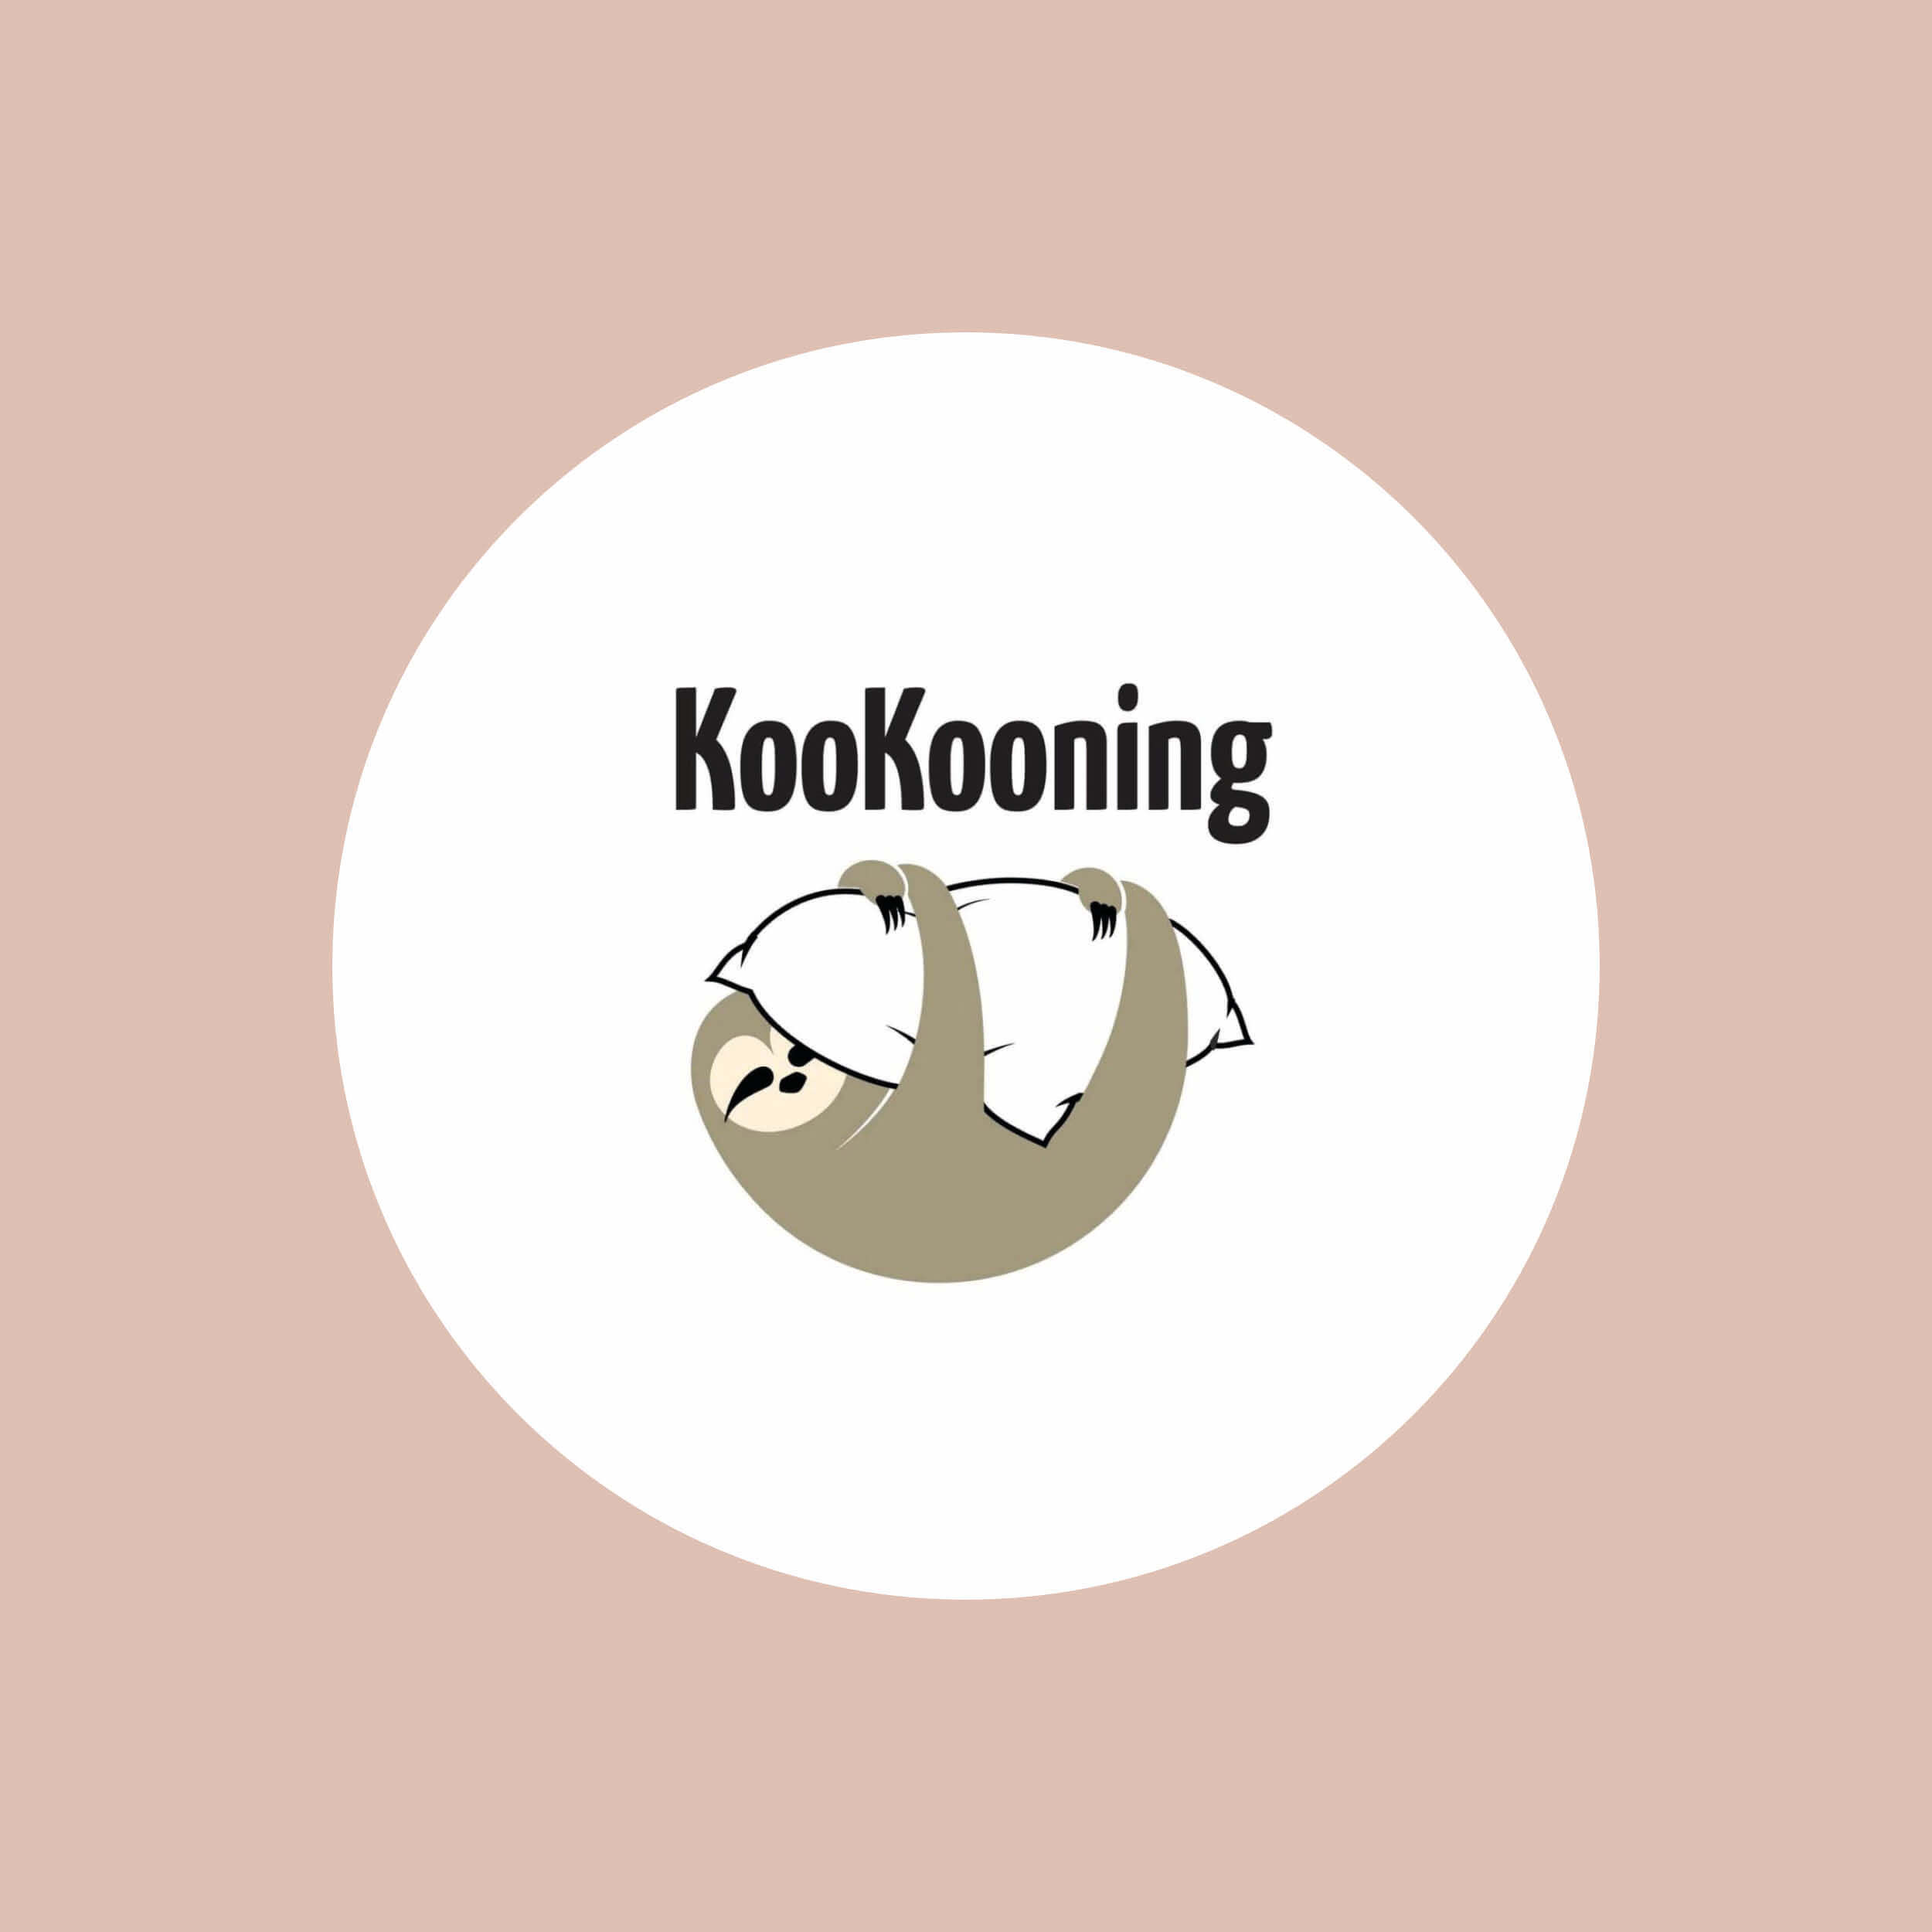 Kookoning – Eine andere Kollaboration